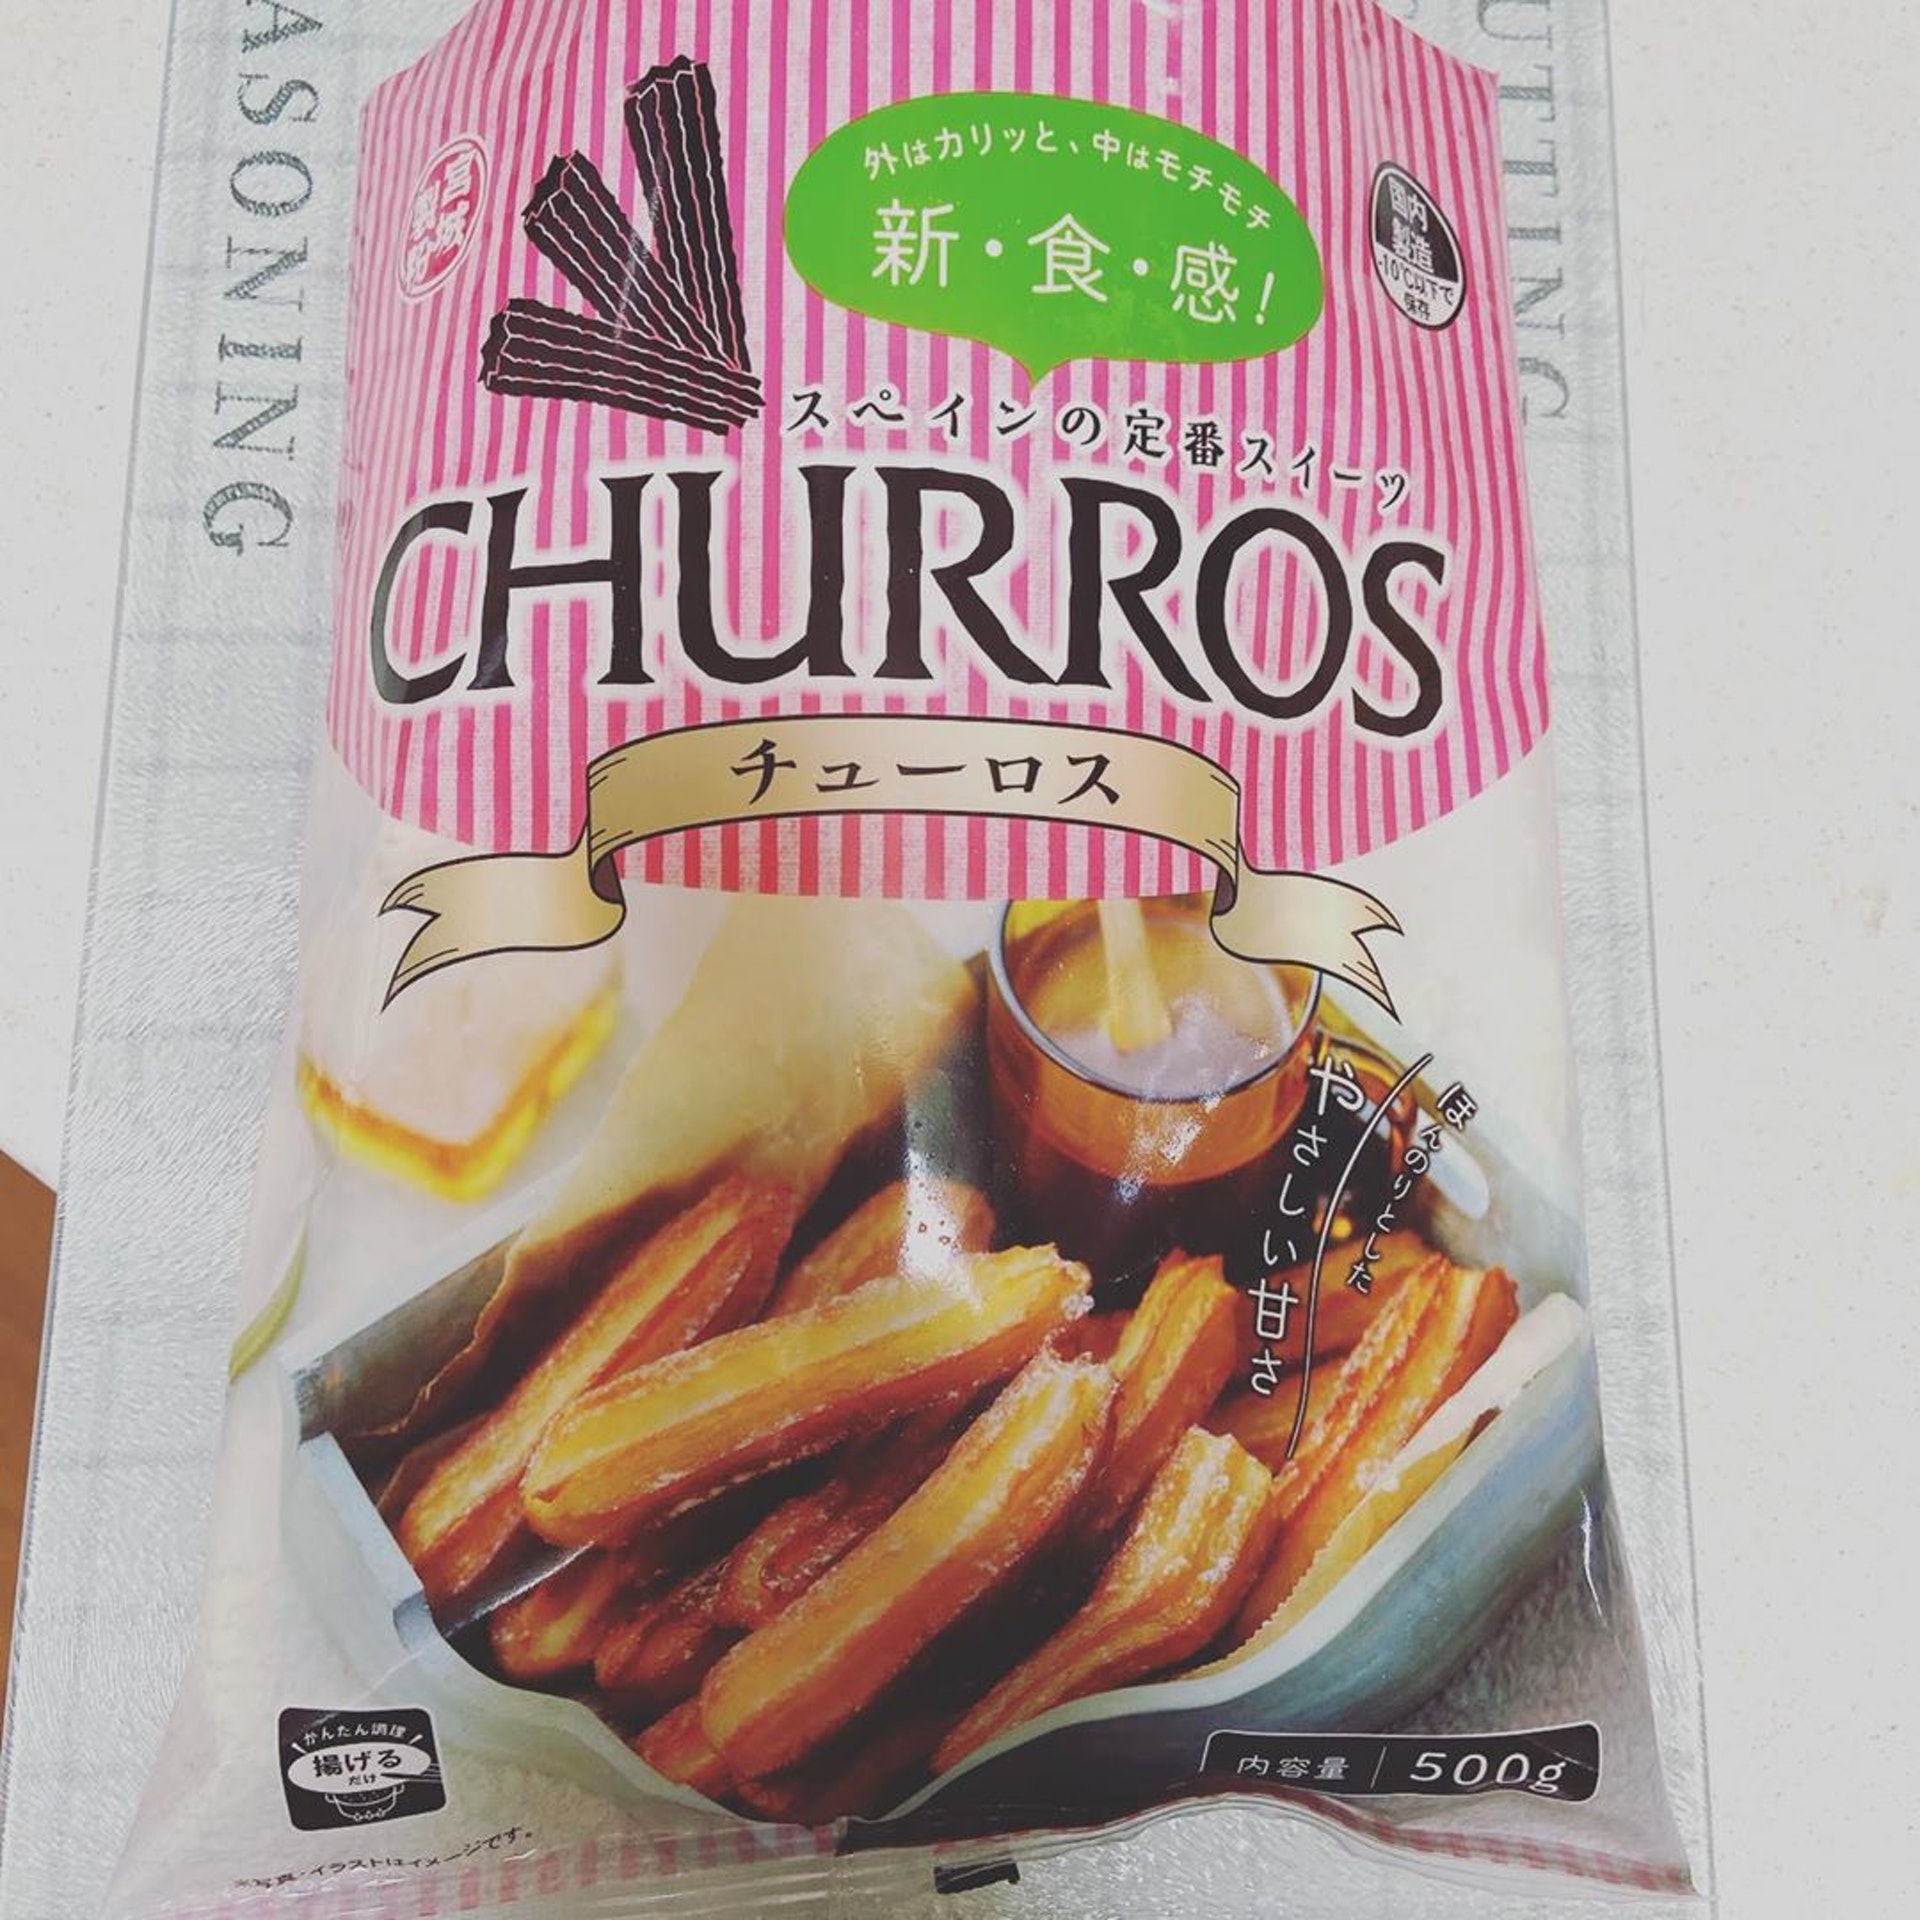 【2】Churros是人氣商品之一。（ig@ tmikau）